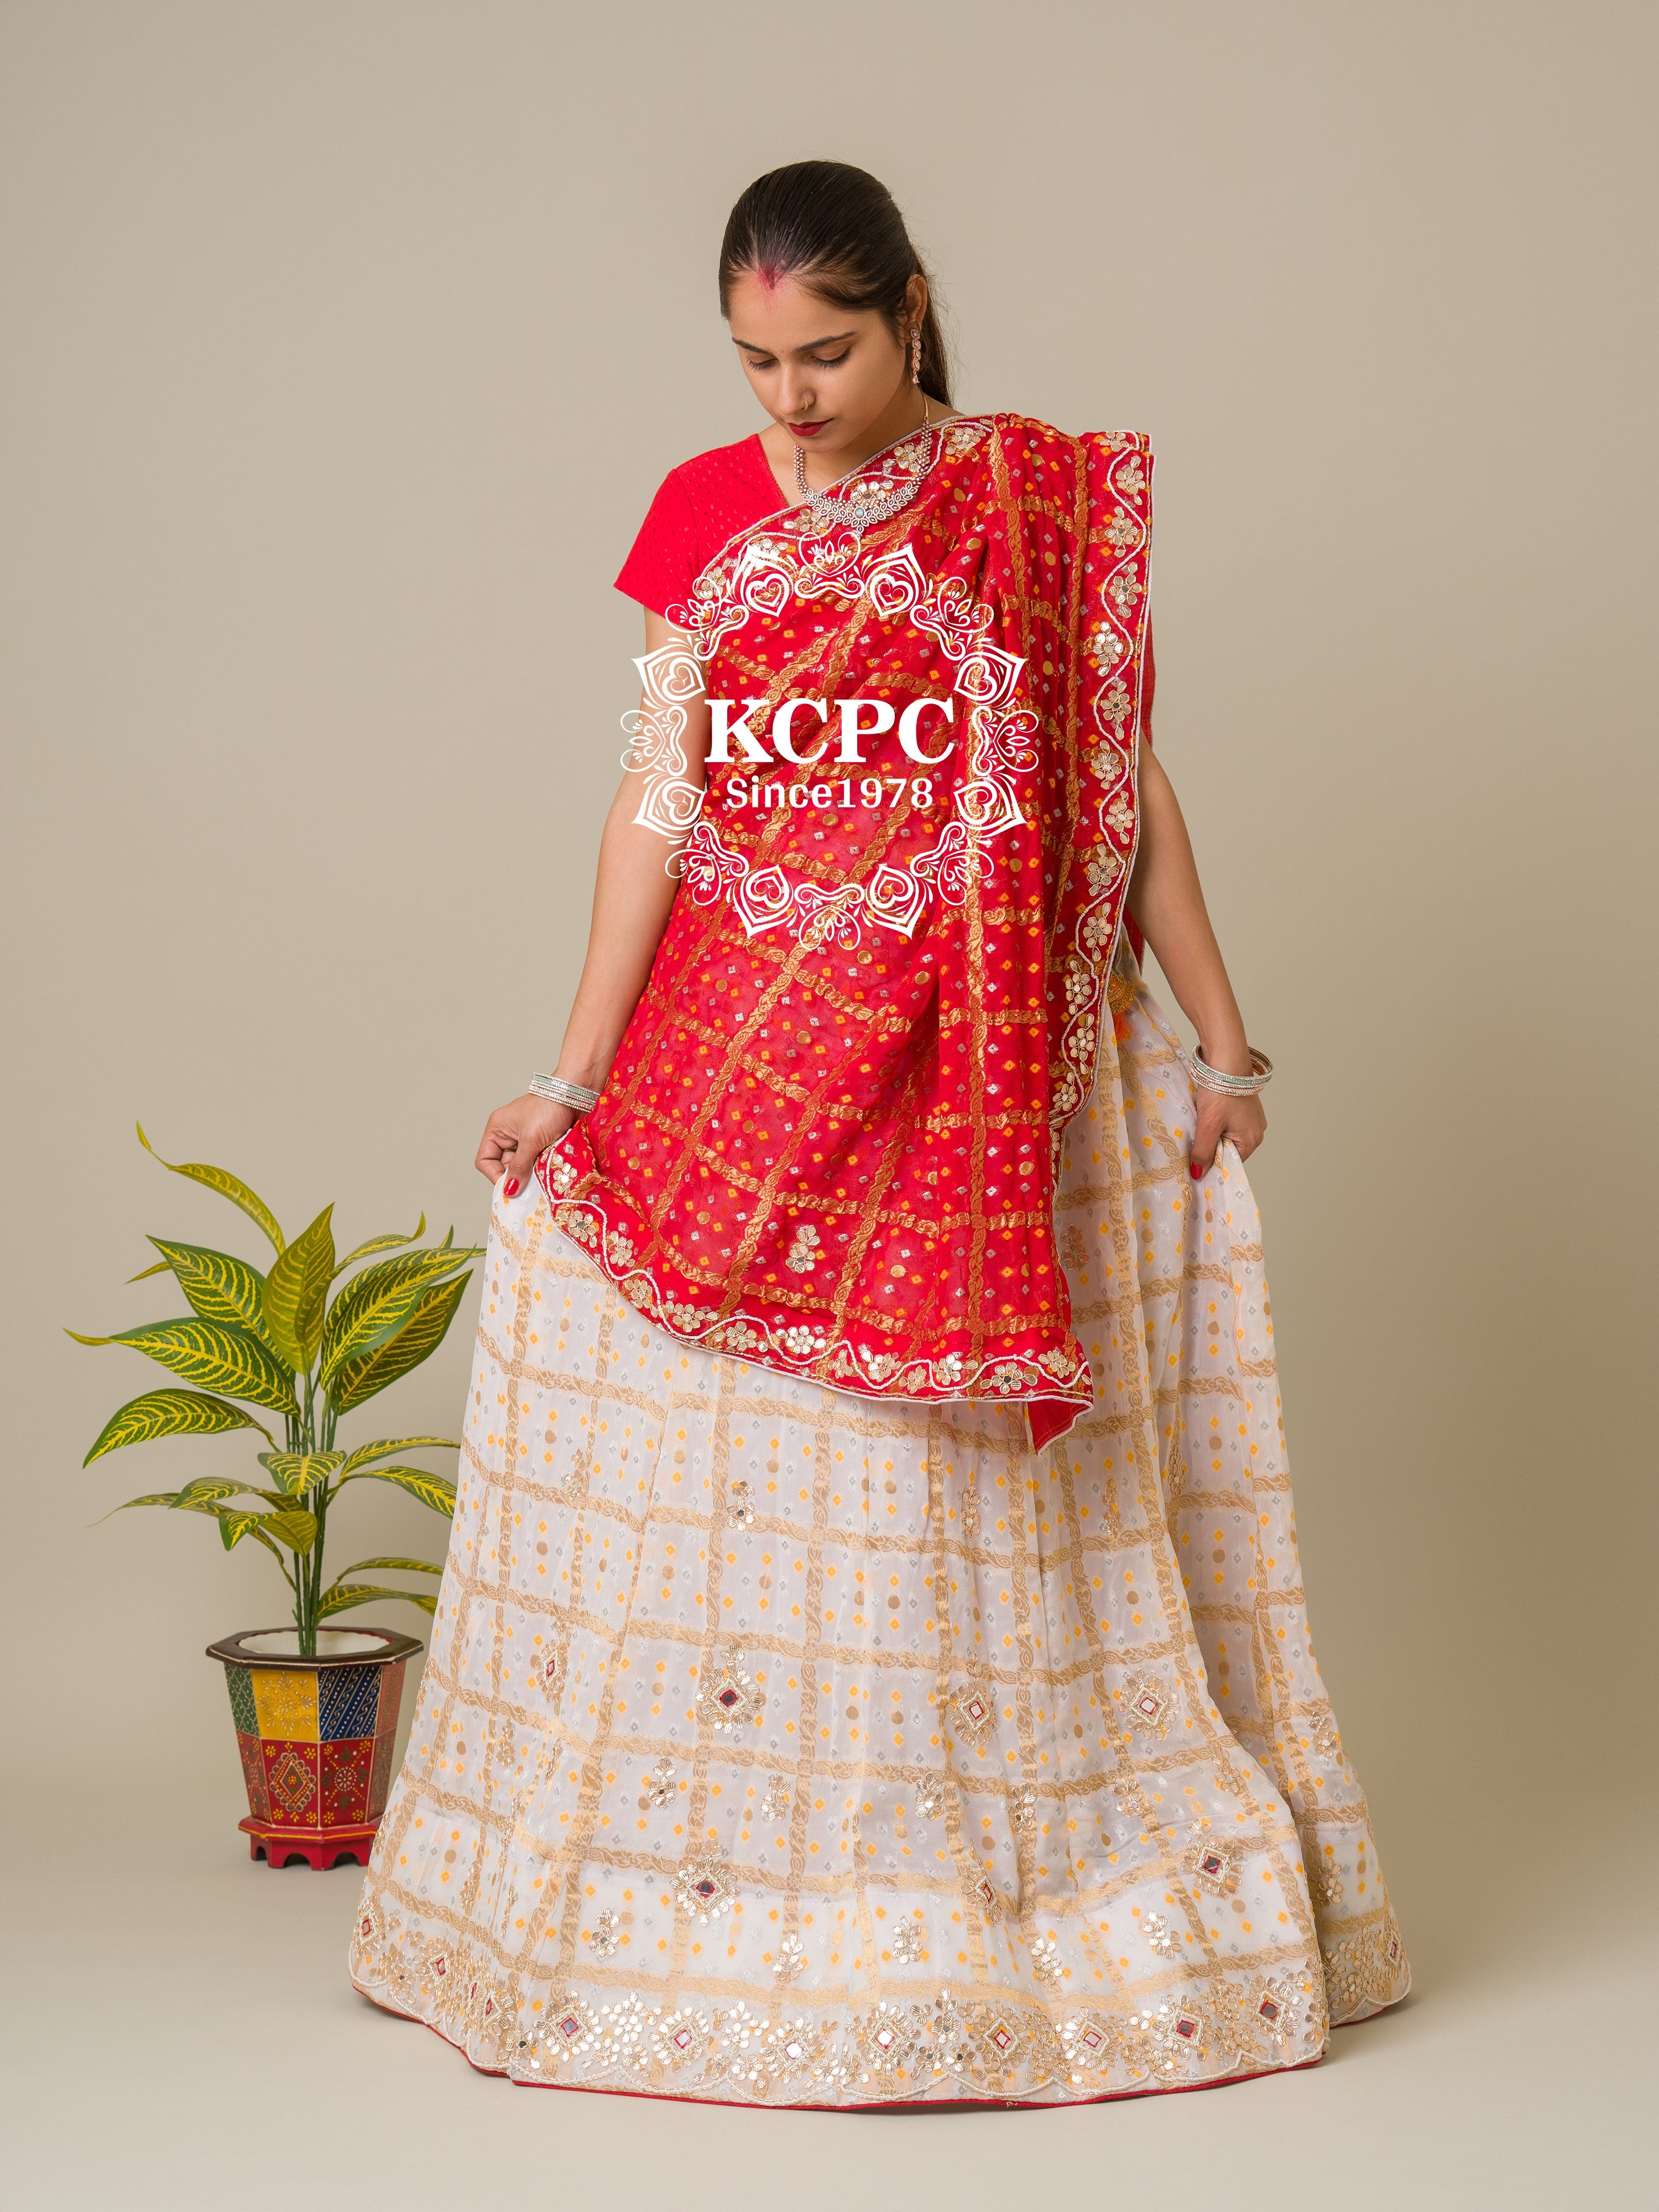 Anita Dongre's Jaipuri Lehenga | Indian bridal outfits, Indian dresses,  Indian fashion dresses